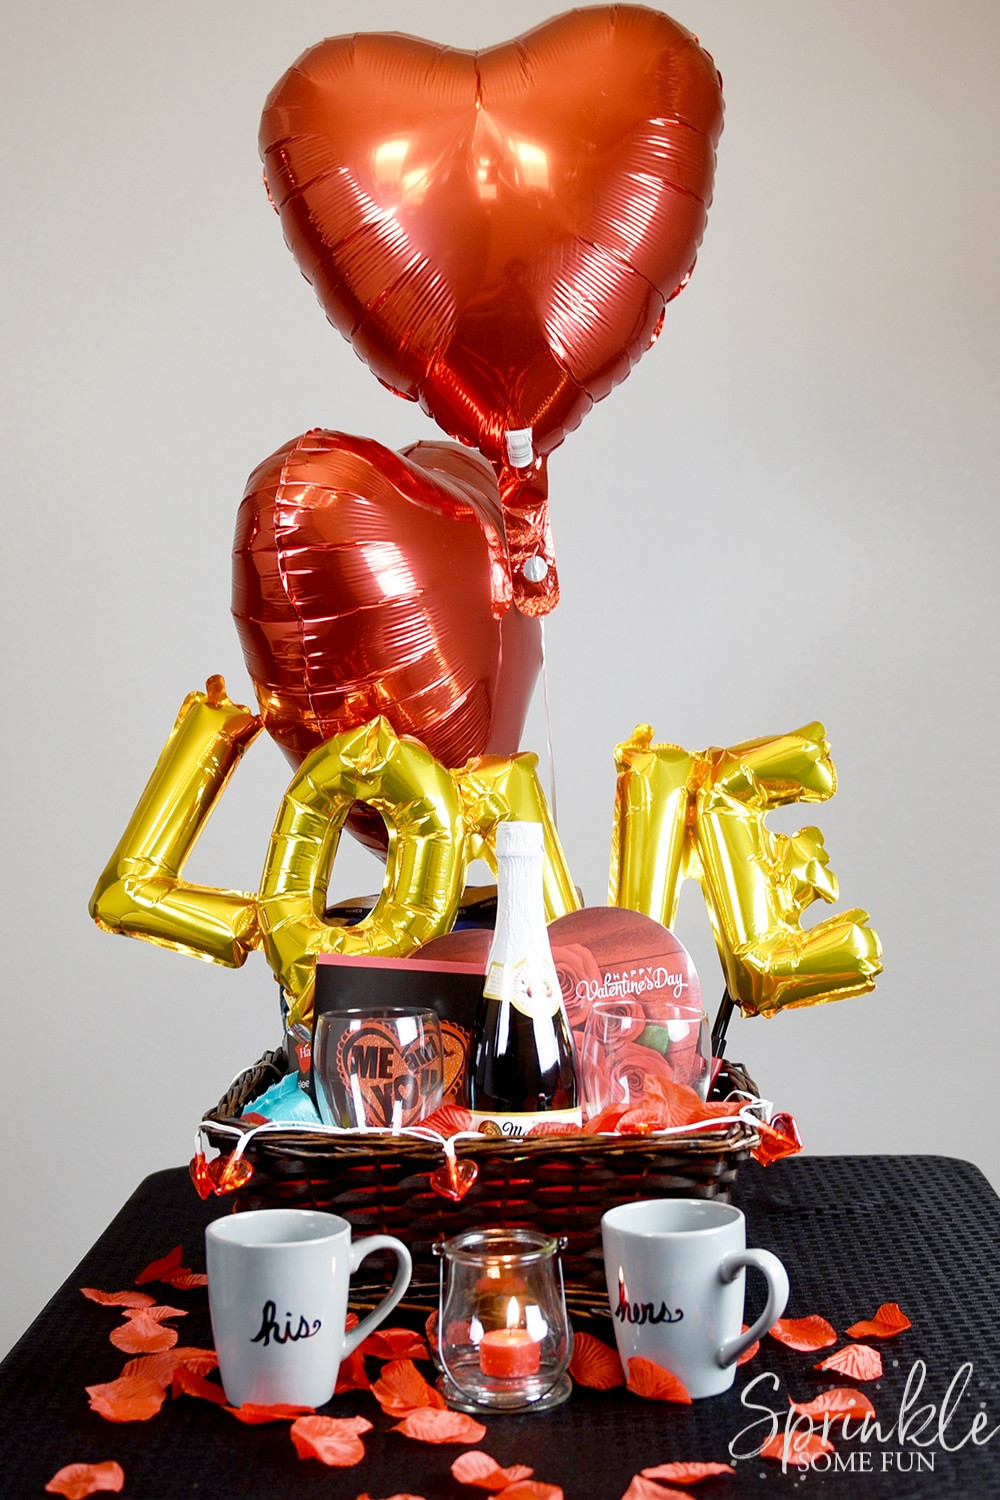 Latest Valentine Gift Ideas
 Romantic Valentine Gift Basket Ideas ⋆ Sprinkle Some Fun